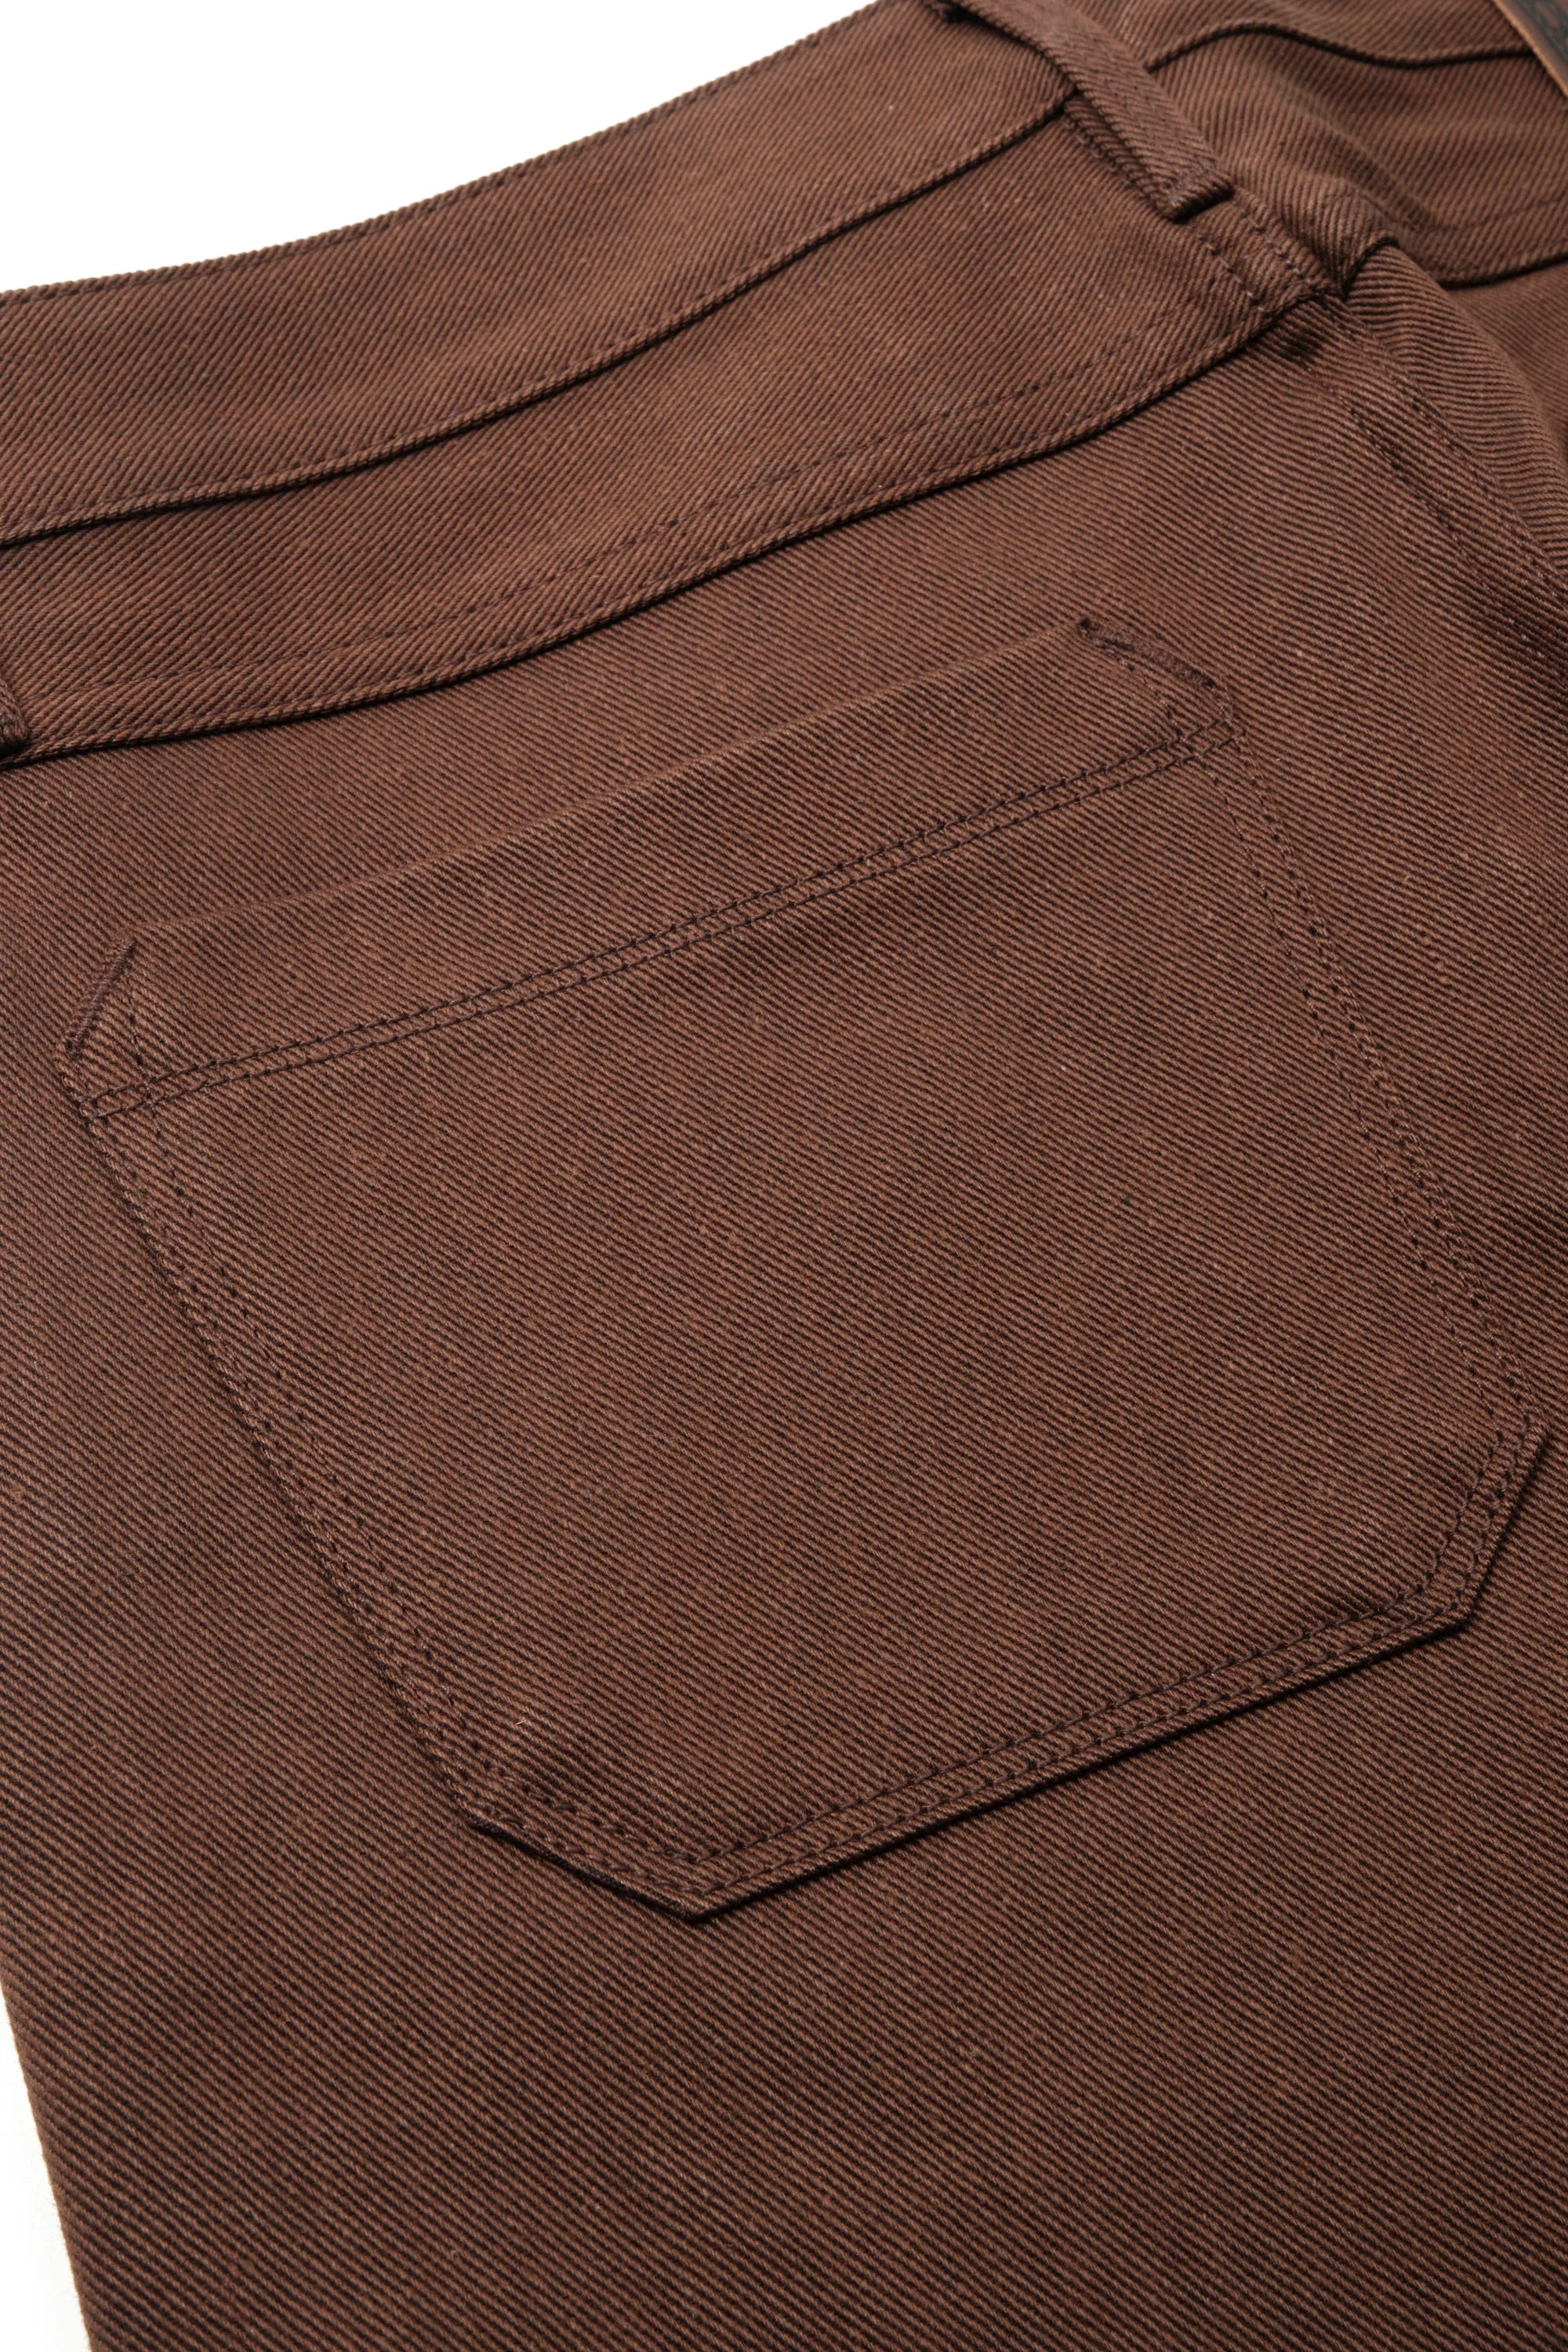 Freenote Cloth Rios - 15oz Dark Brown Denim